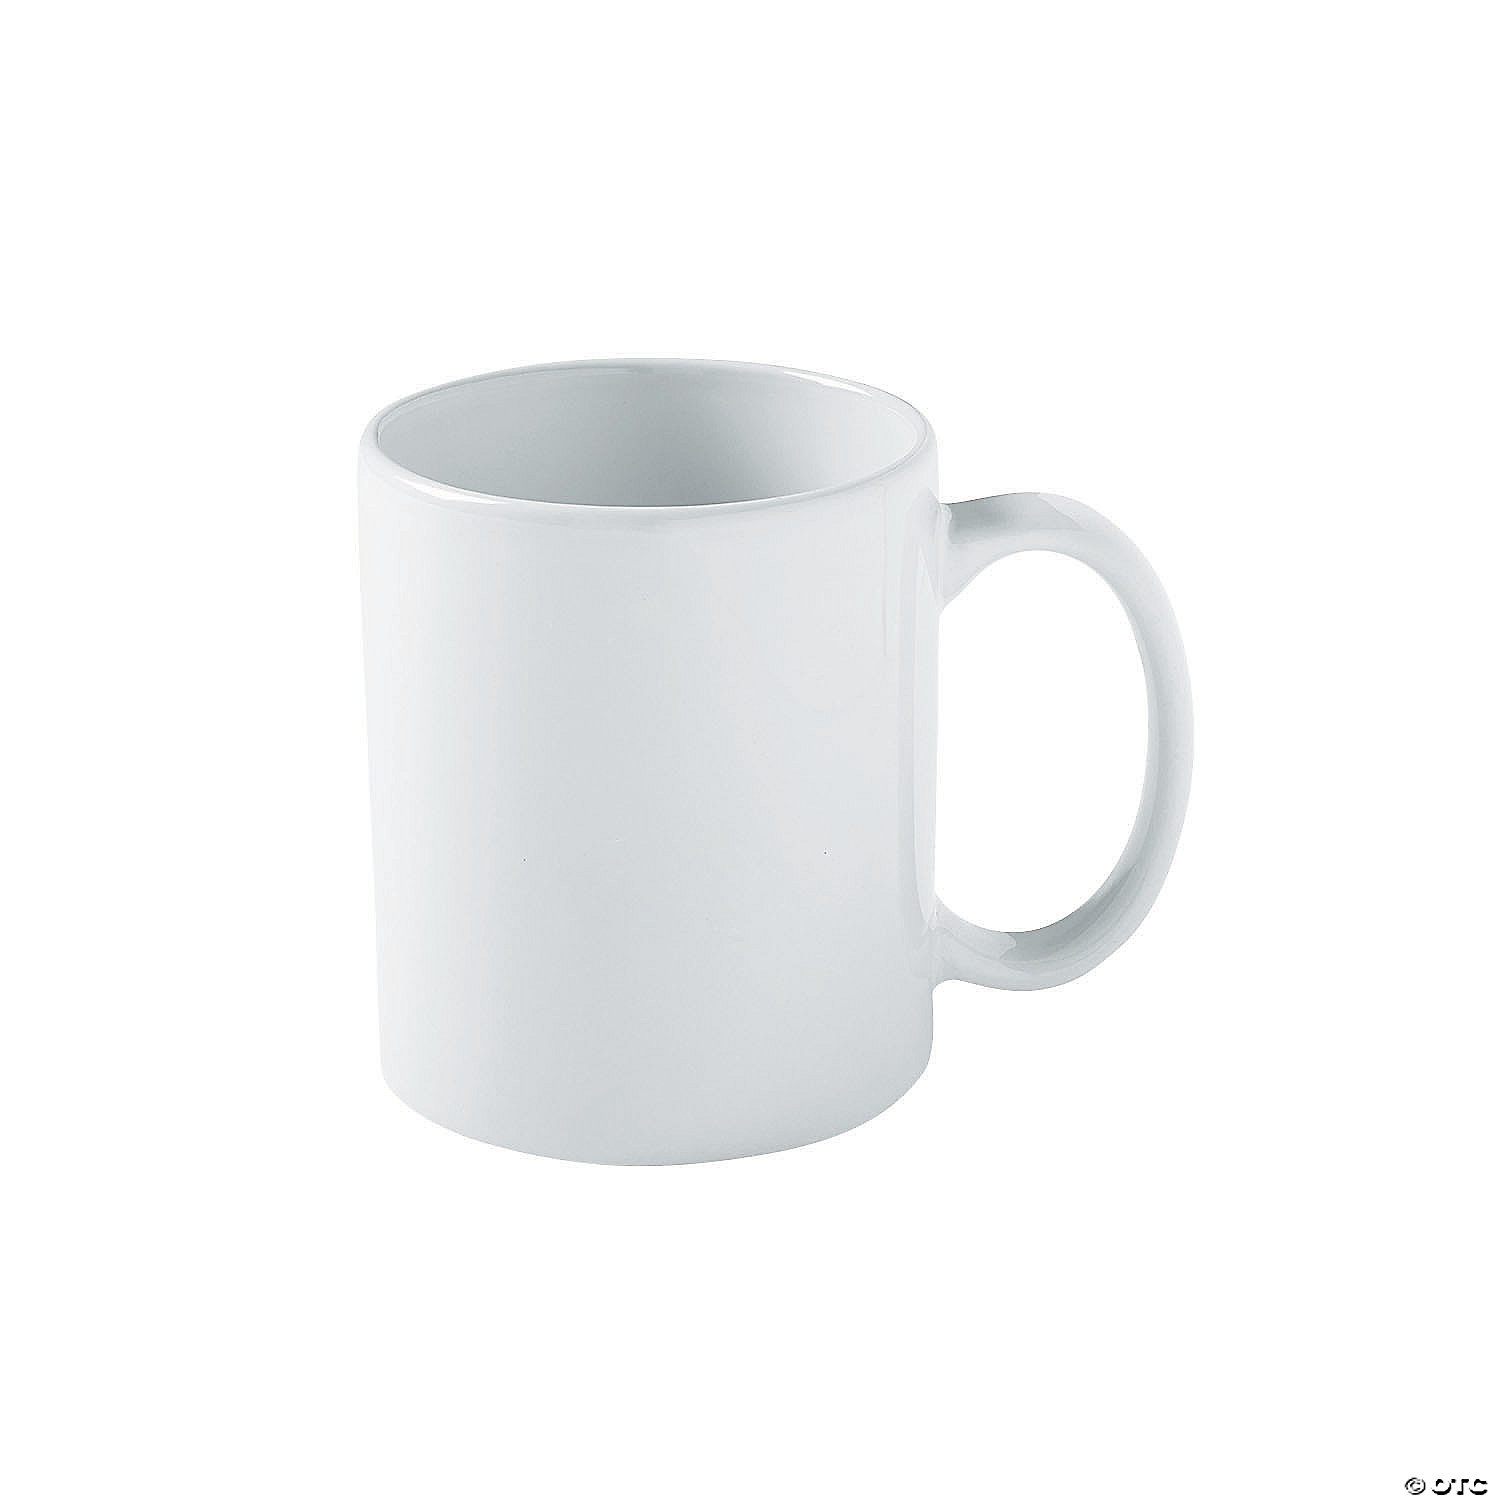 1pcs Plain Mug Cup Gloss White Ceramic Tea Coffee Drinking Mugs 